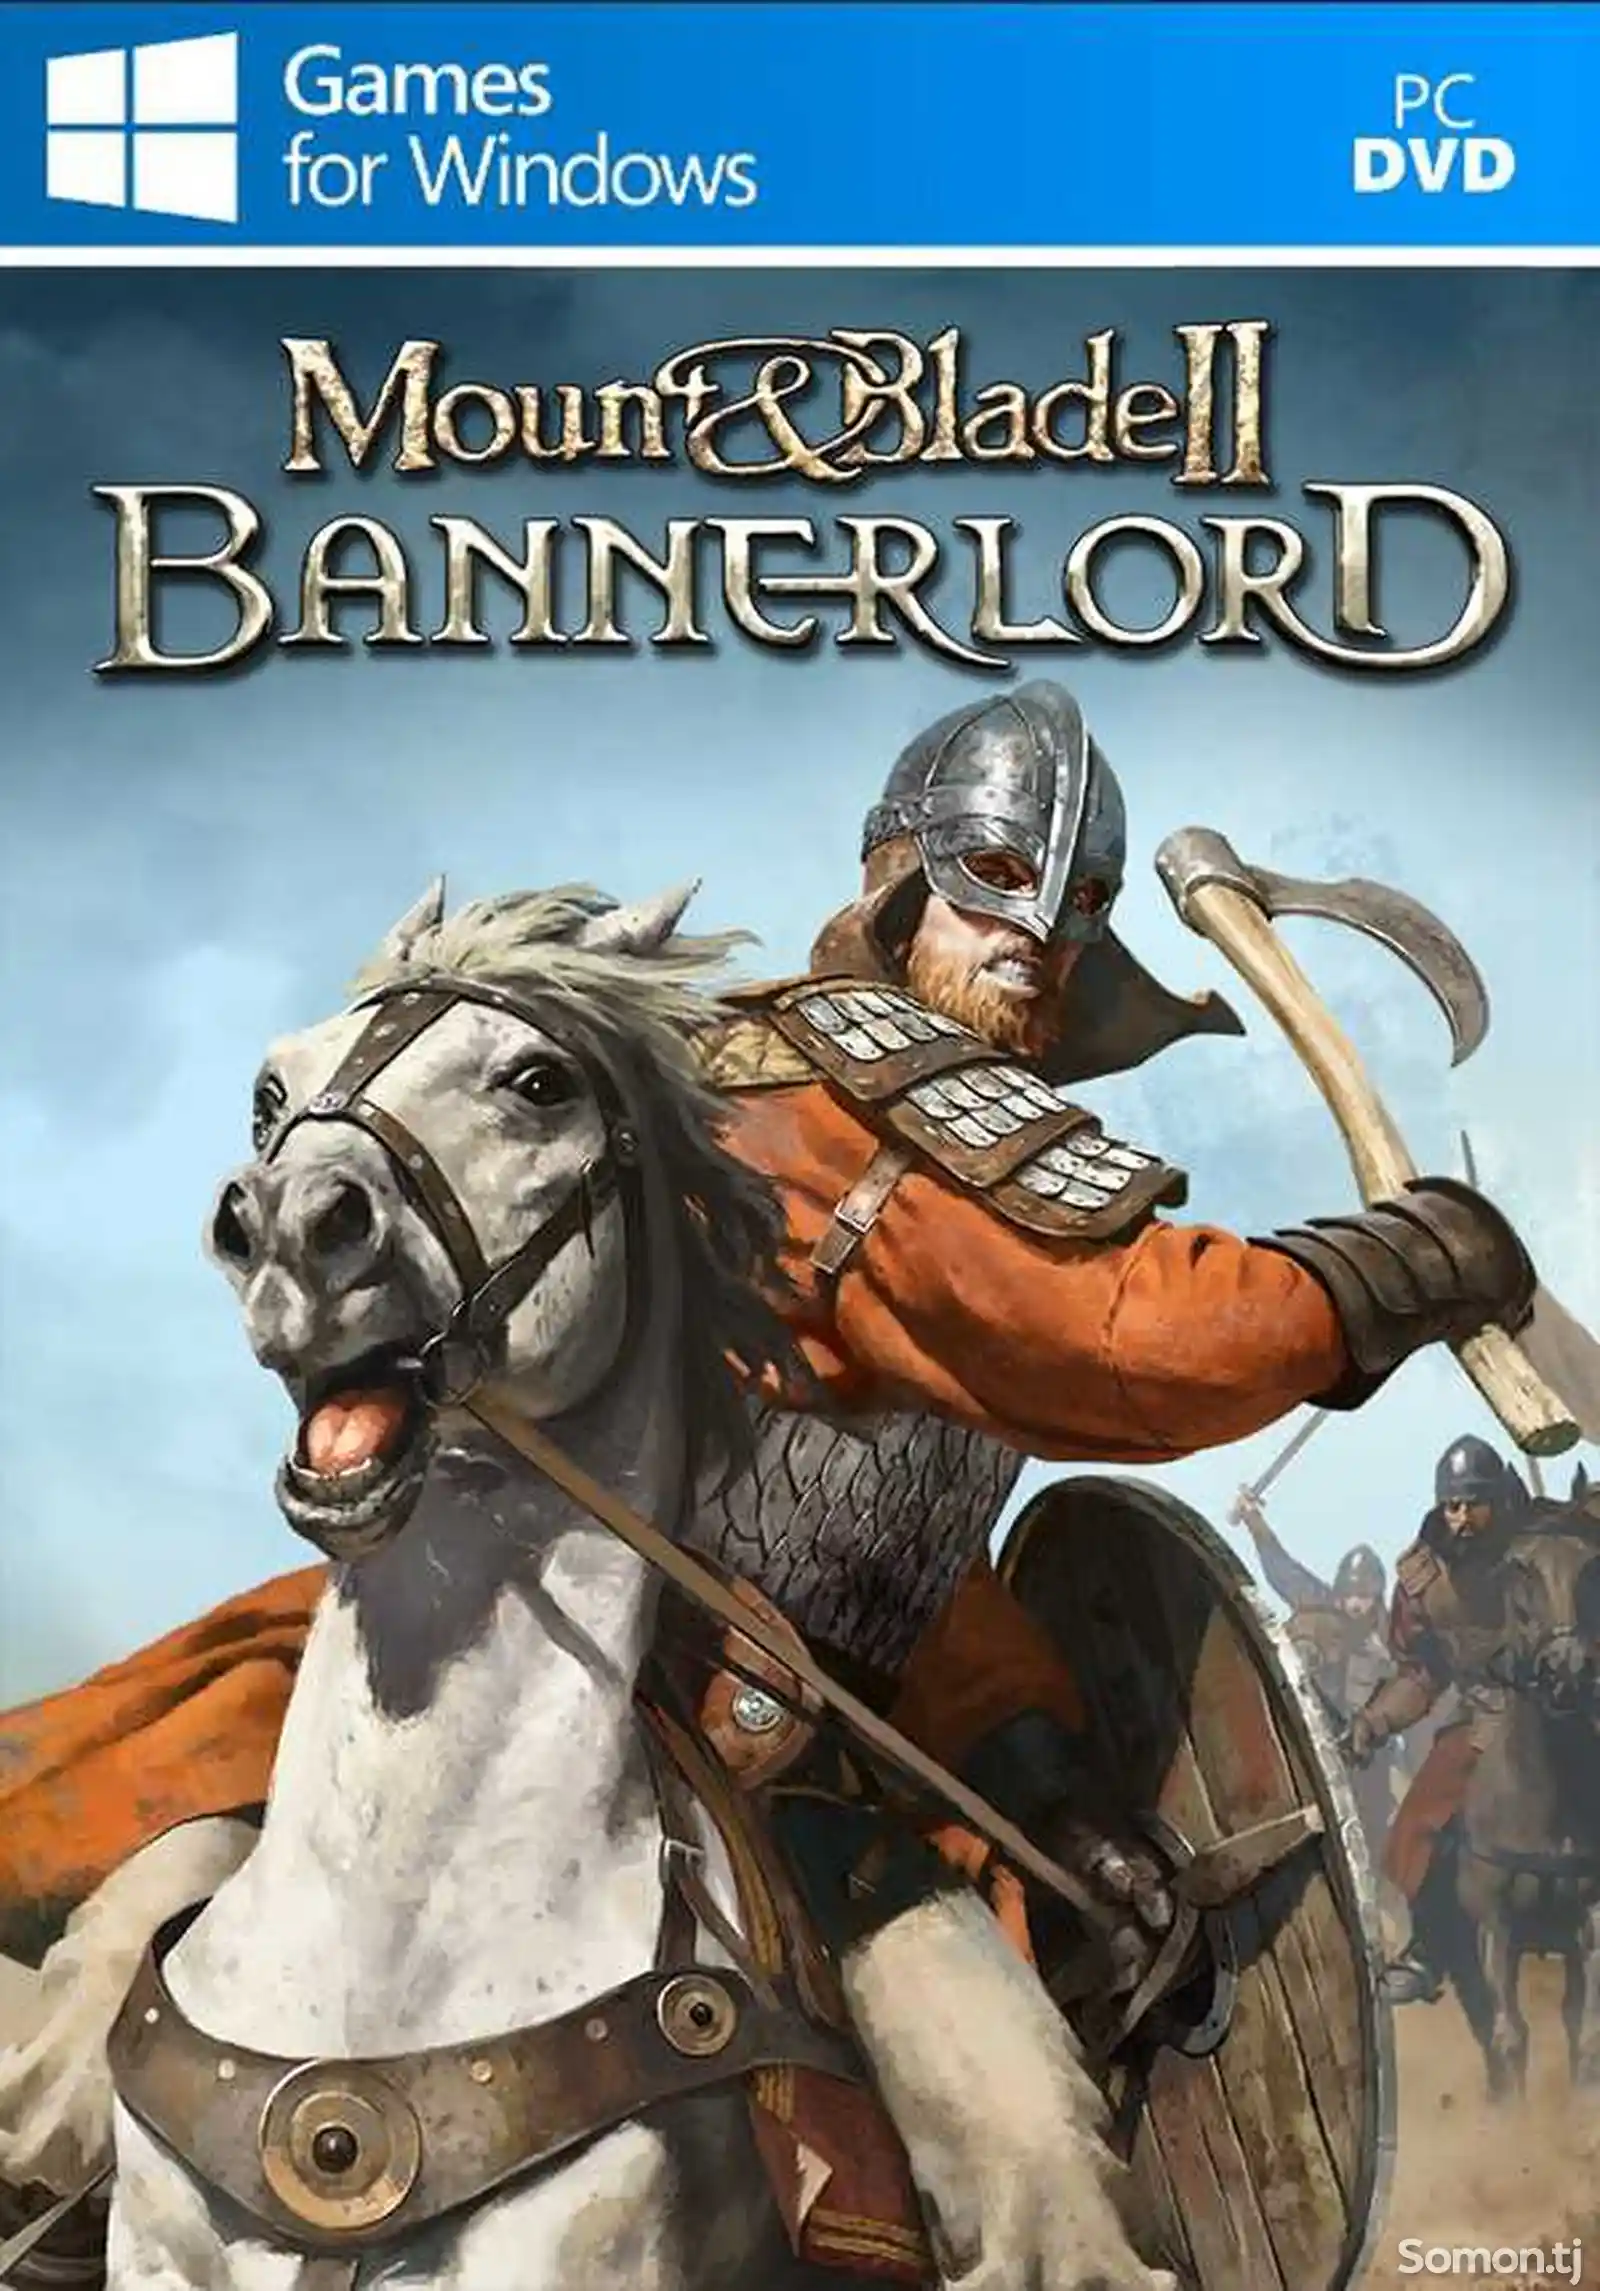 Игра Mount and blade 2 bannerlord для компьютера-пк-pc-1